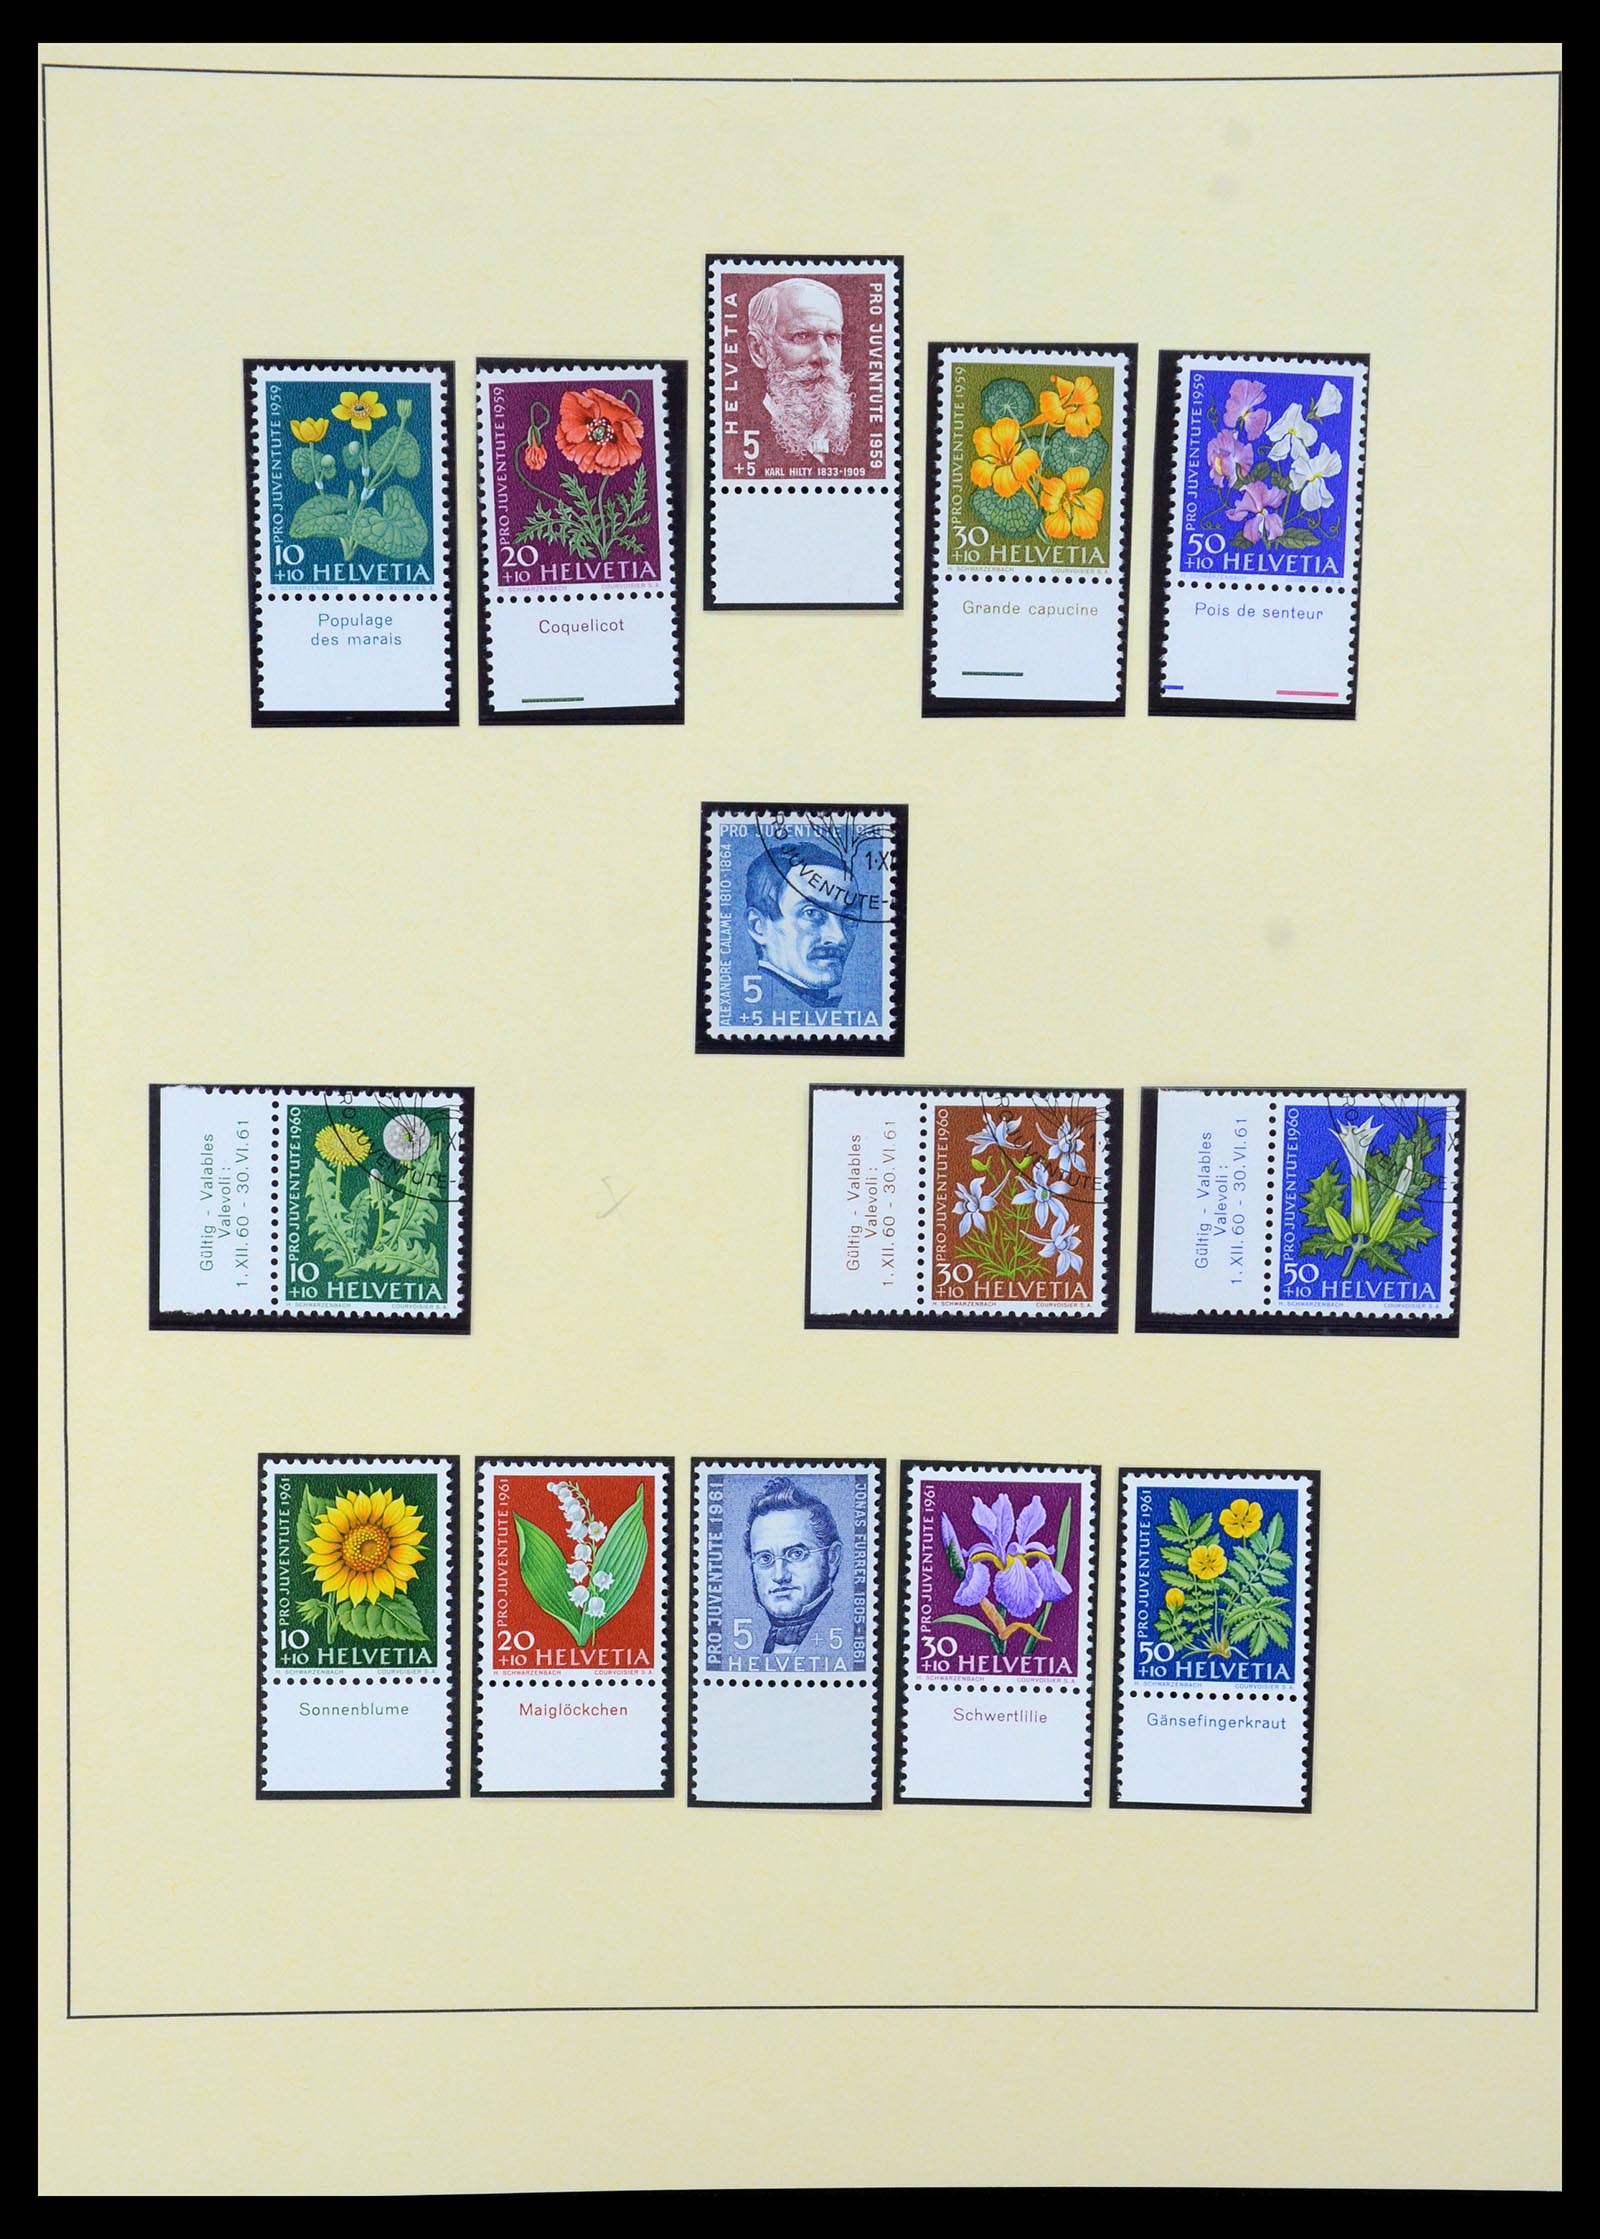 35668 017 - Stamp Collection 35668 Switzerland Pro Juventute and Pro Patria 1910-197